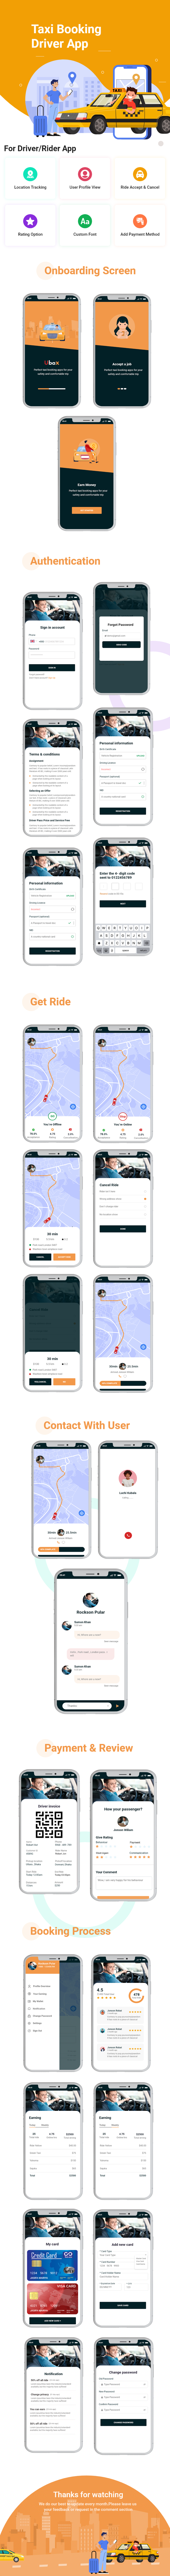 Ubax - Biggest Ride Sharing Flutter Full App UI Kit - 3